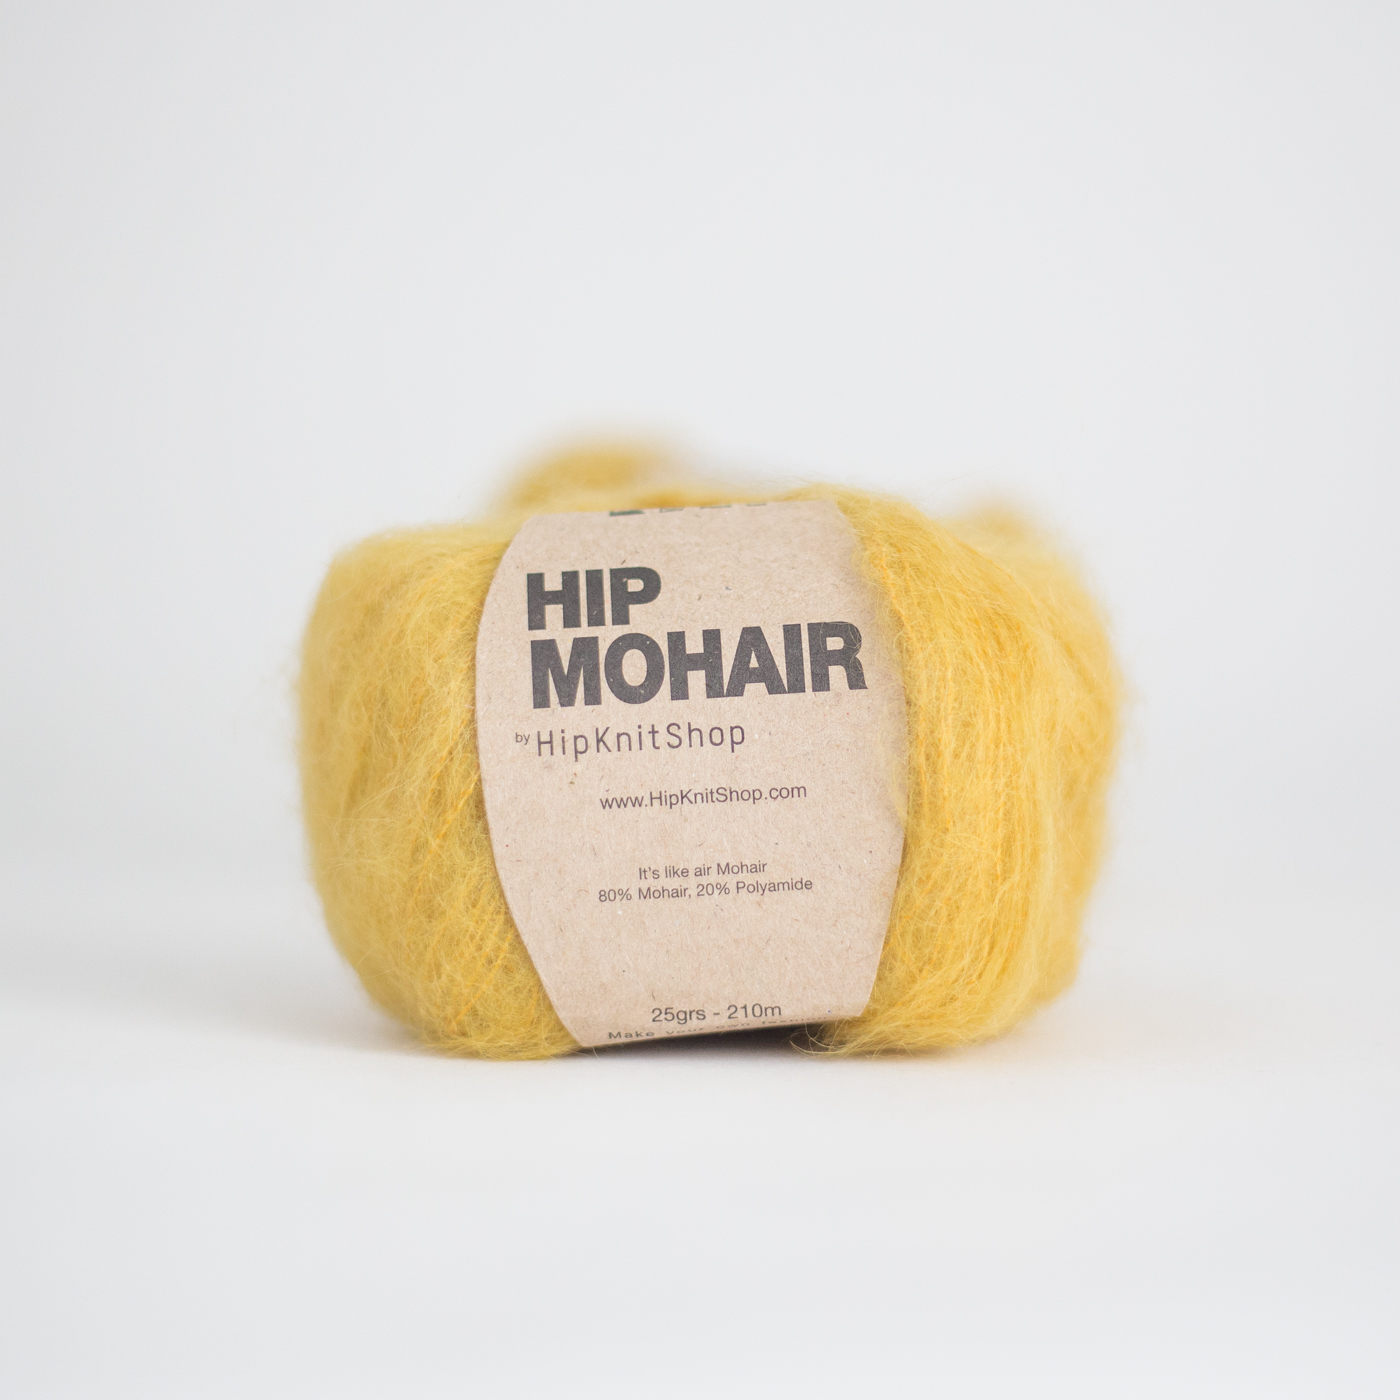 mohair yarn - Honey dream mohair| Hip Mohair Yarn - by HipKnitShop - 01/06/2018